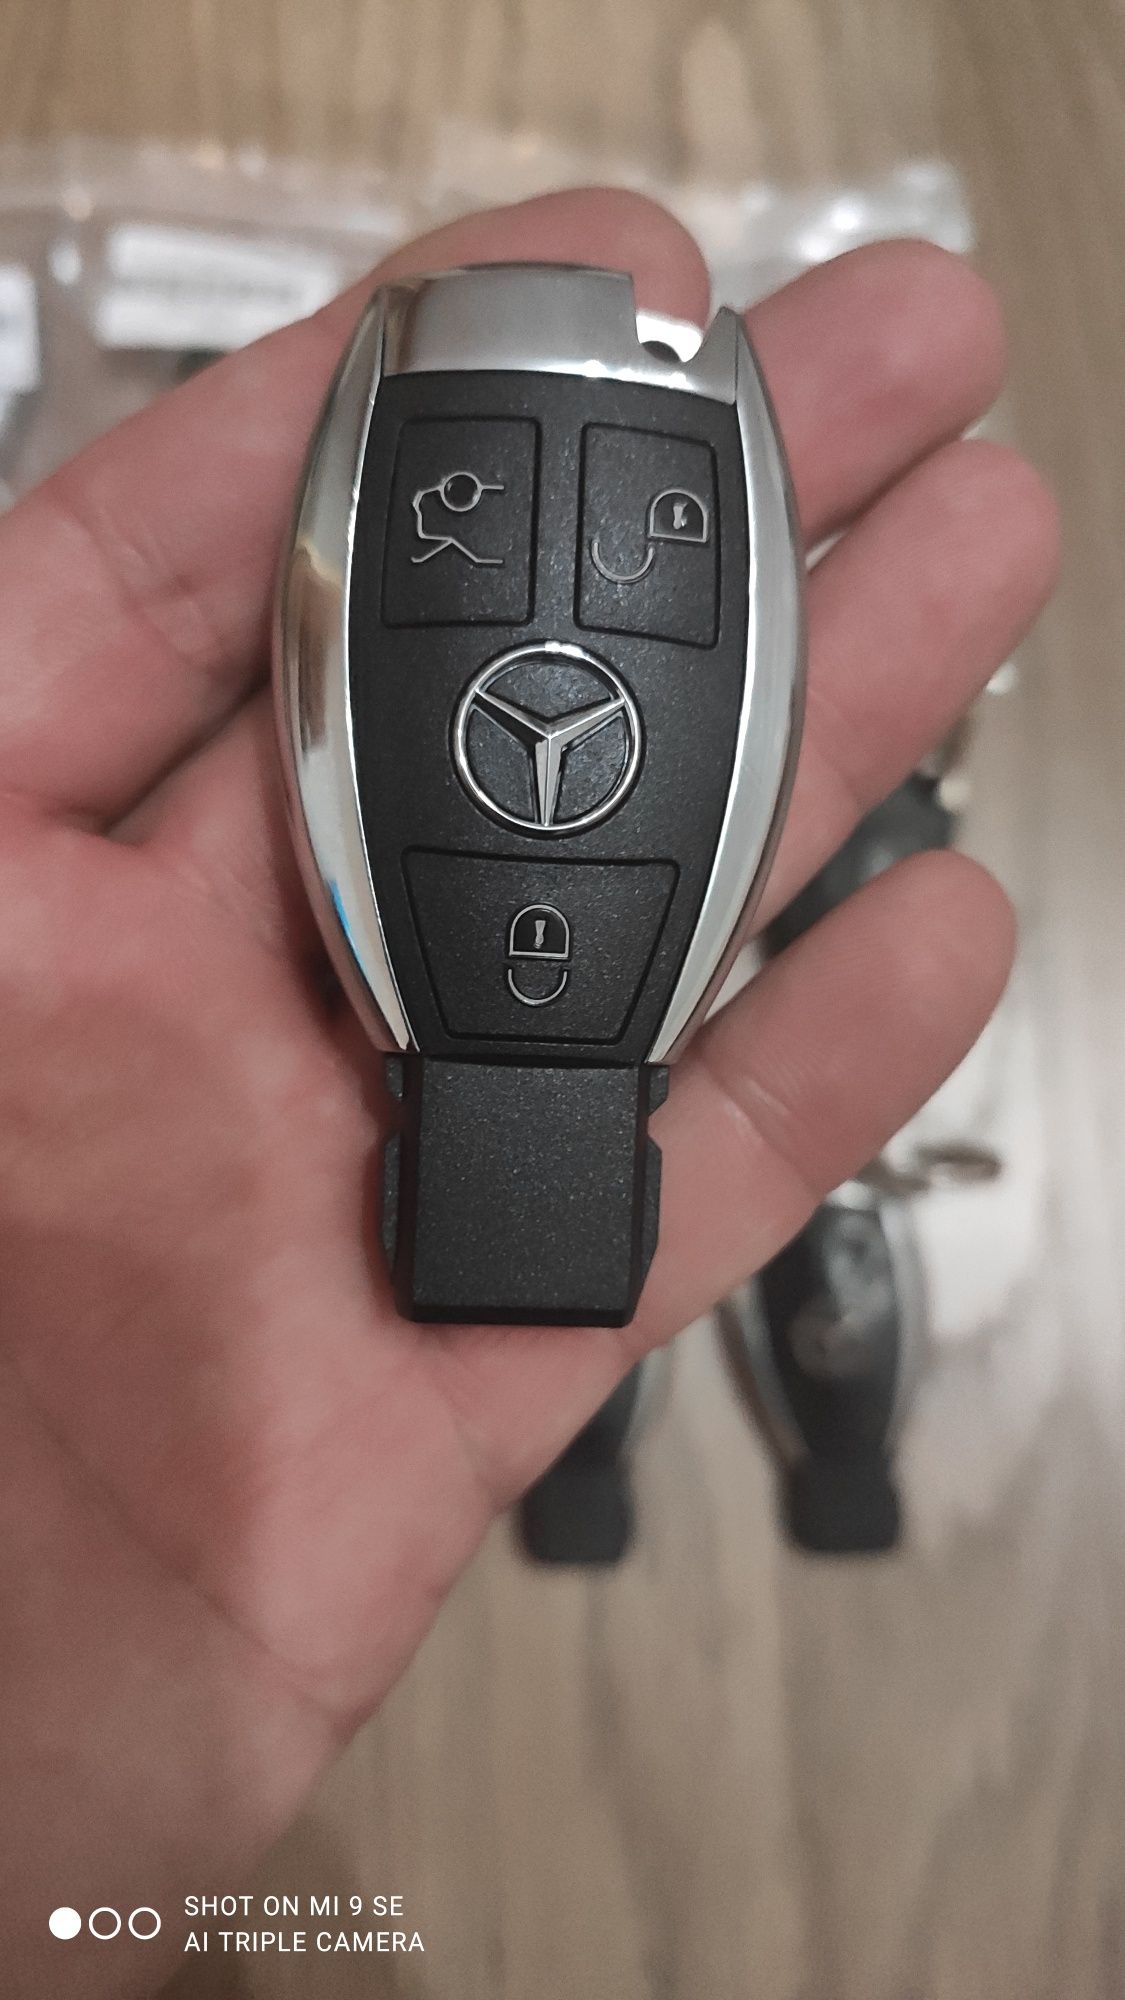 Ключ Mercedes Benz, дубликат W210,211,212,220,221,906,639...